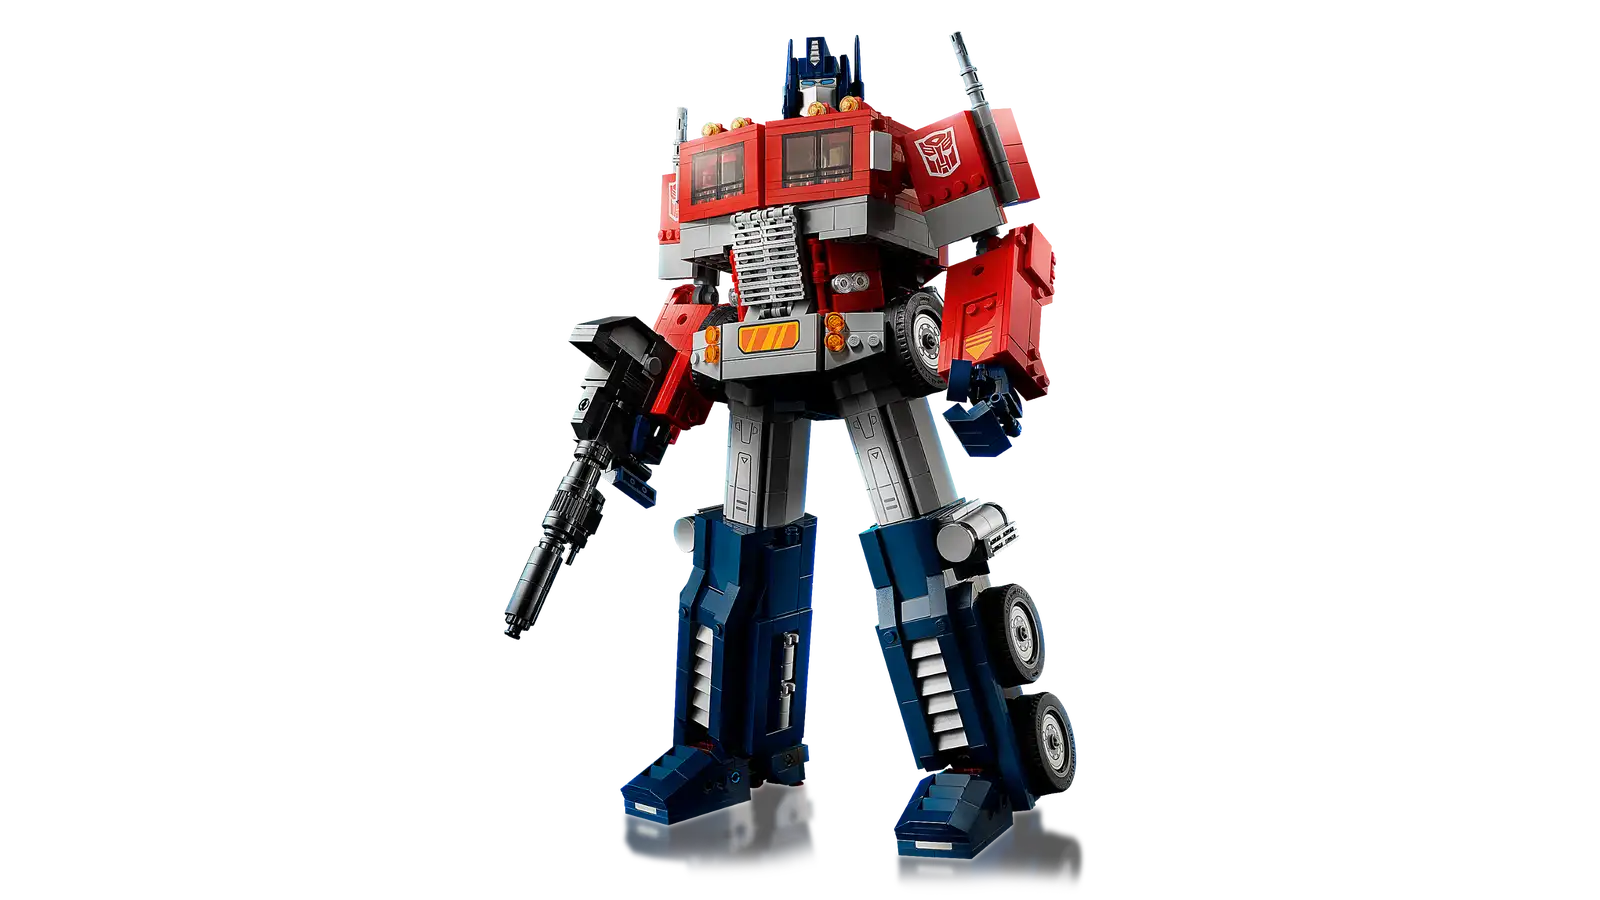 LEGO® 10302 - Transformers Optimus Prime - Karten-Kiosk.de